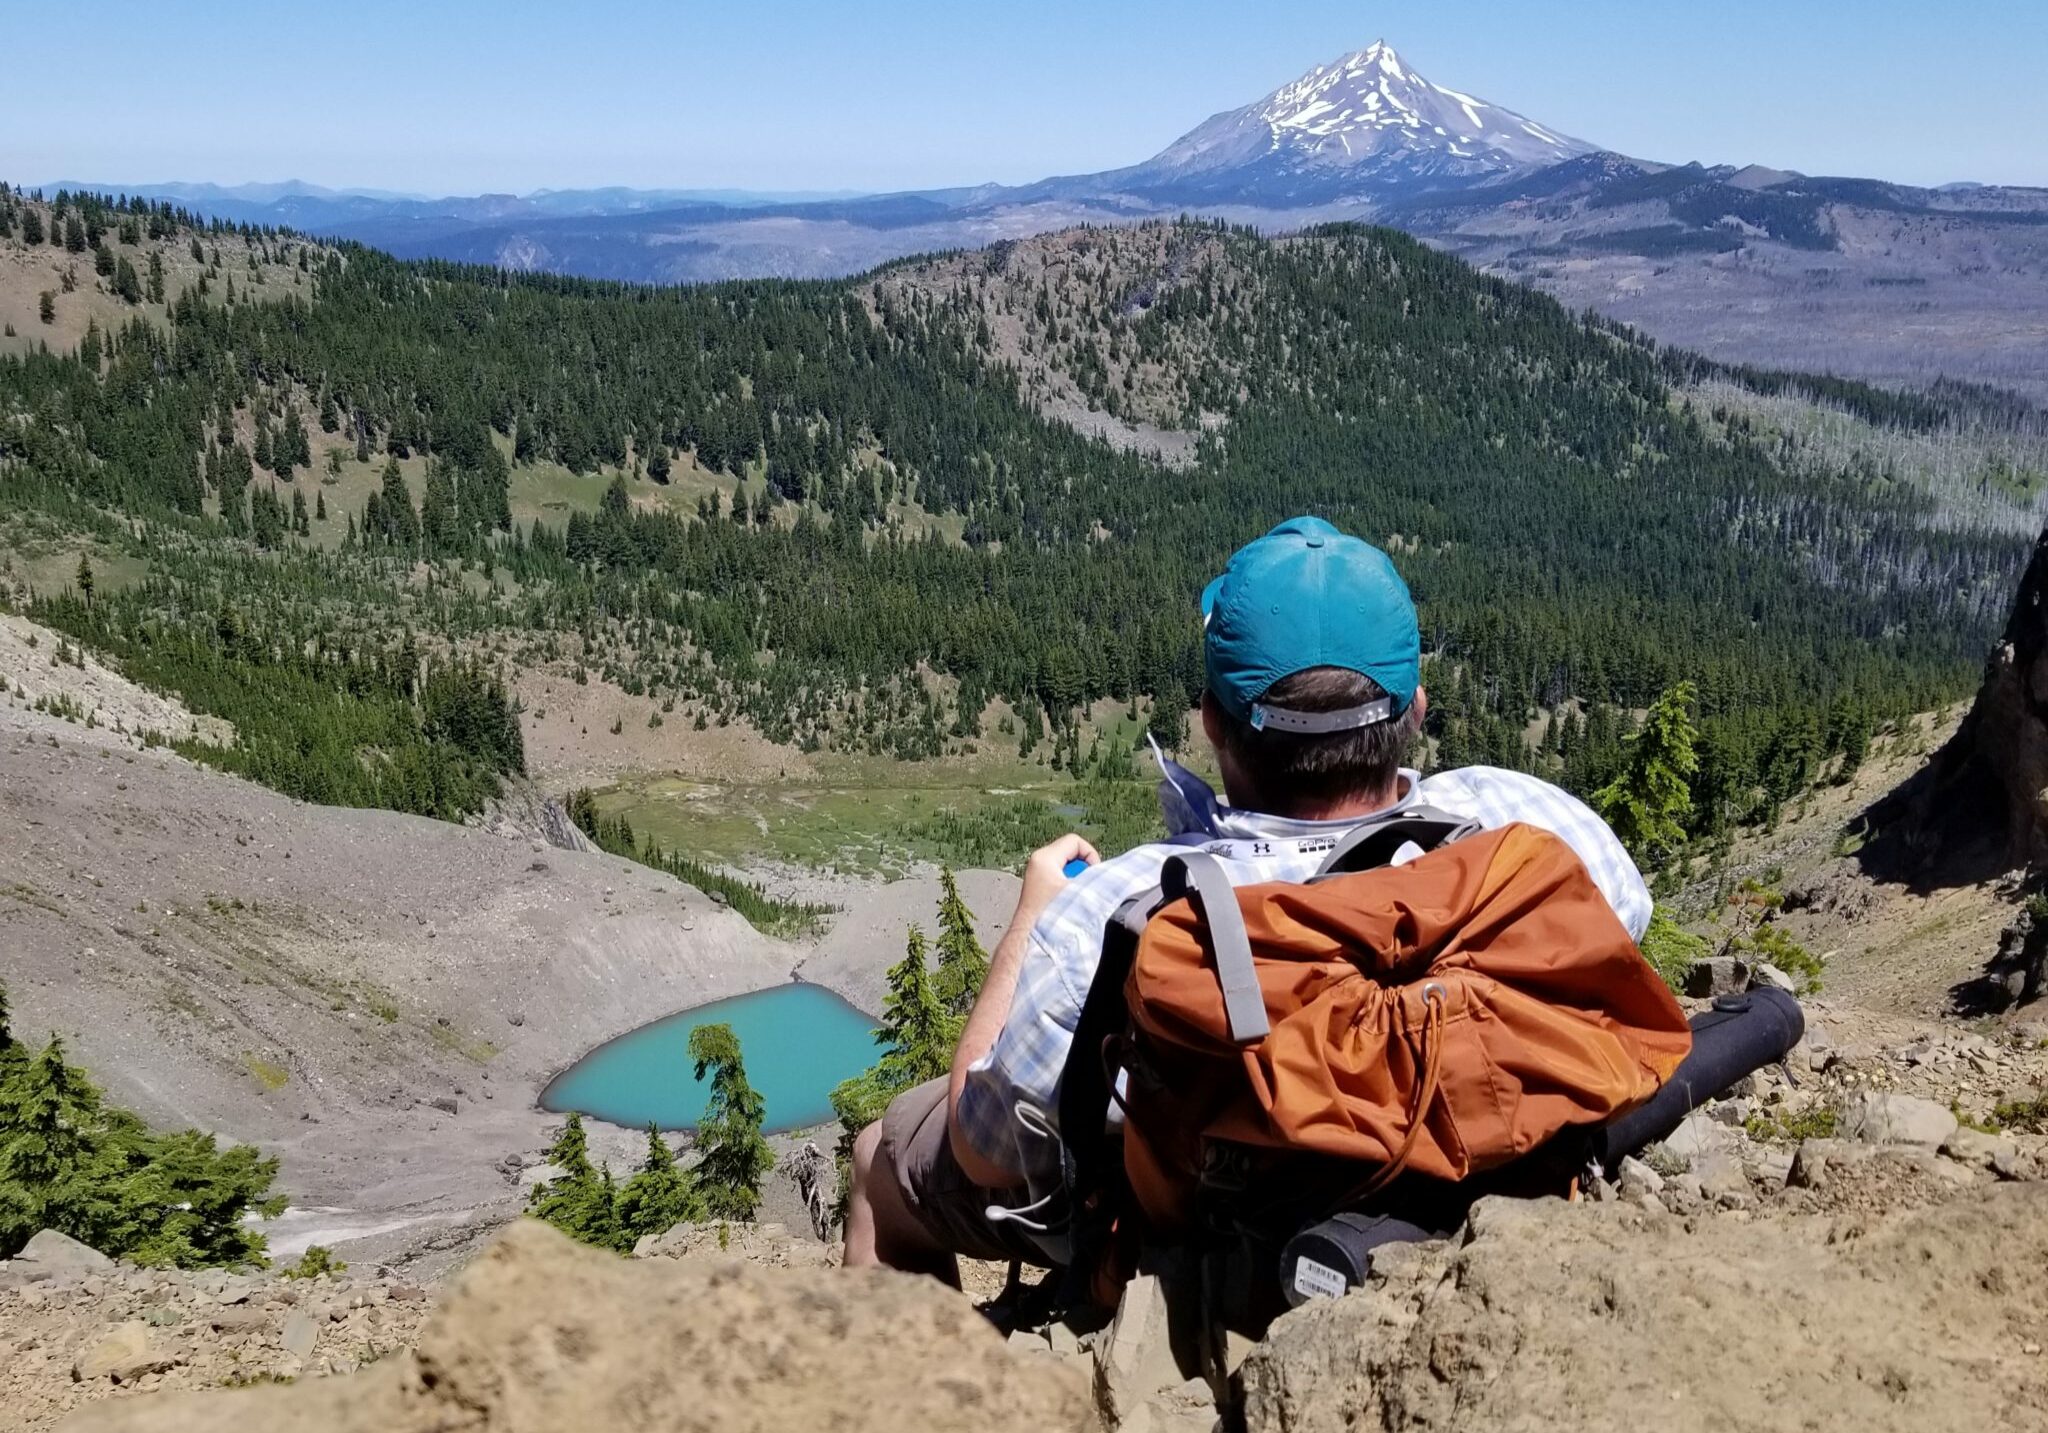 Backpacker looking across moraine landscape at Mt. Jefferson, thinking about WordPress Website Design near Bend, Oregon